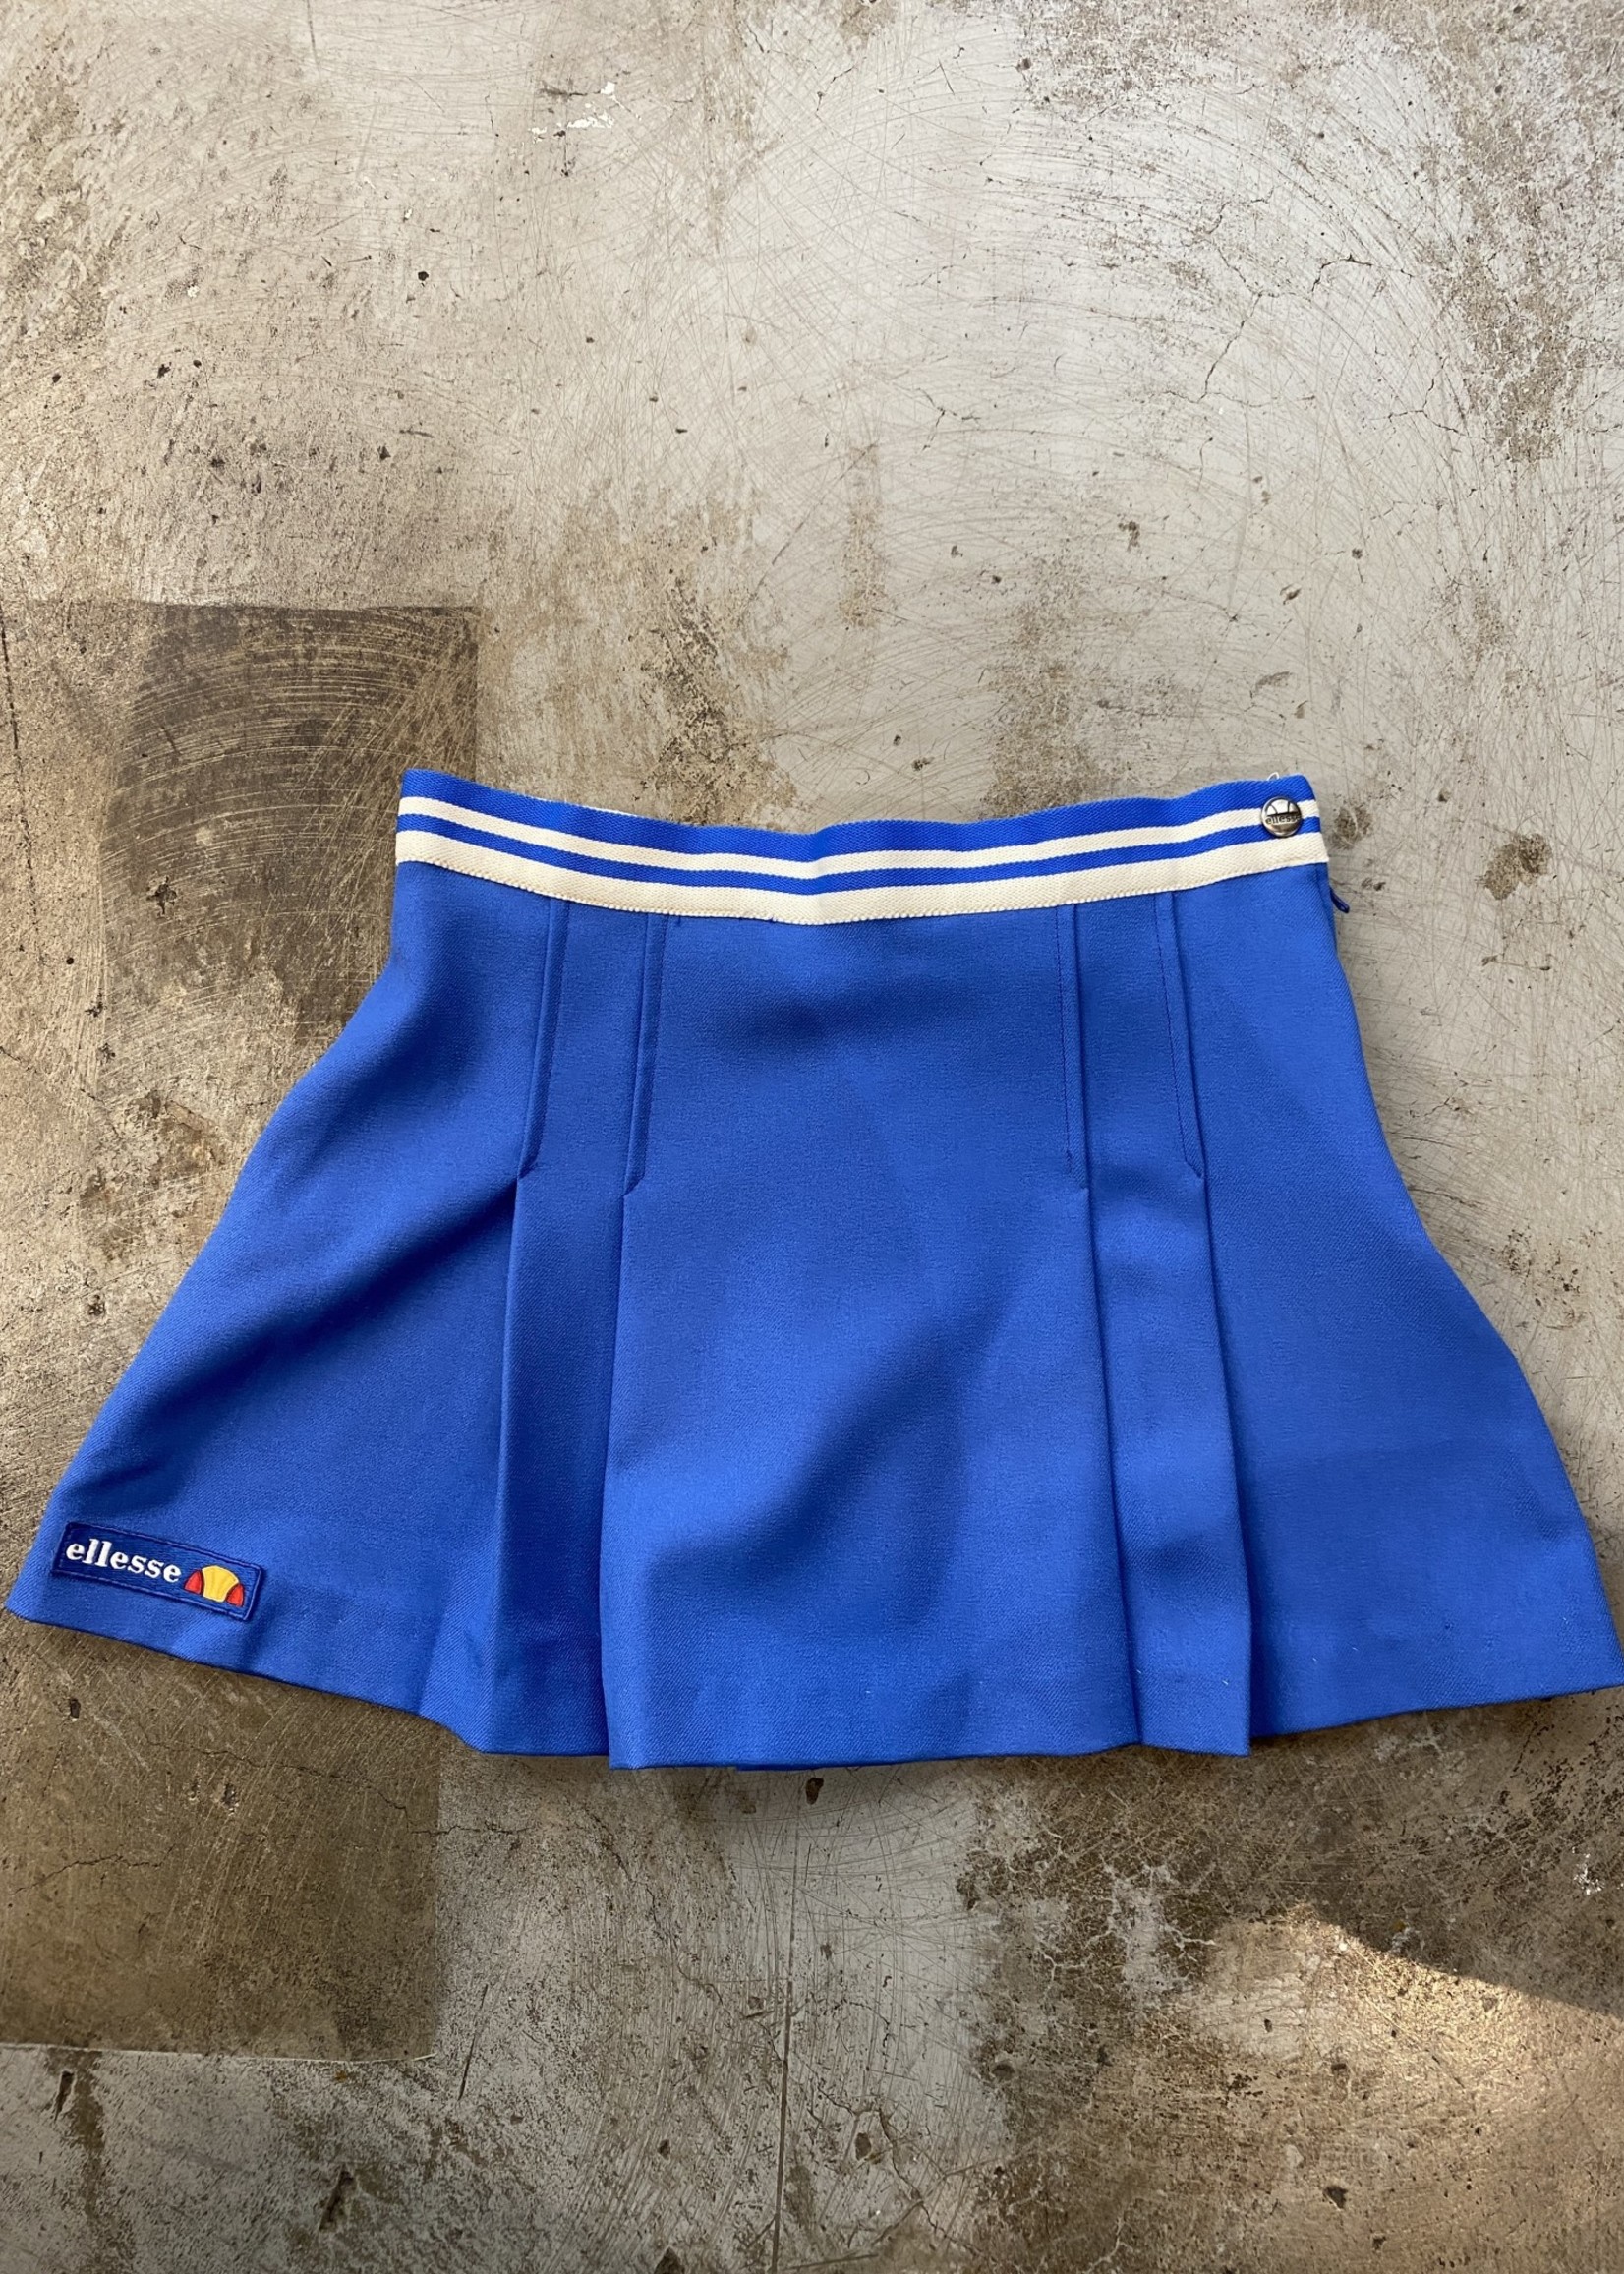 Ellese Vintage Blue Tennis Skirt 28/S